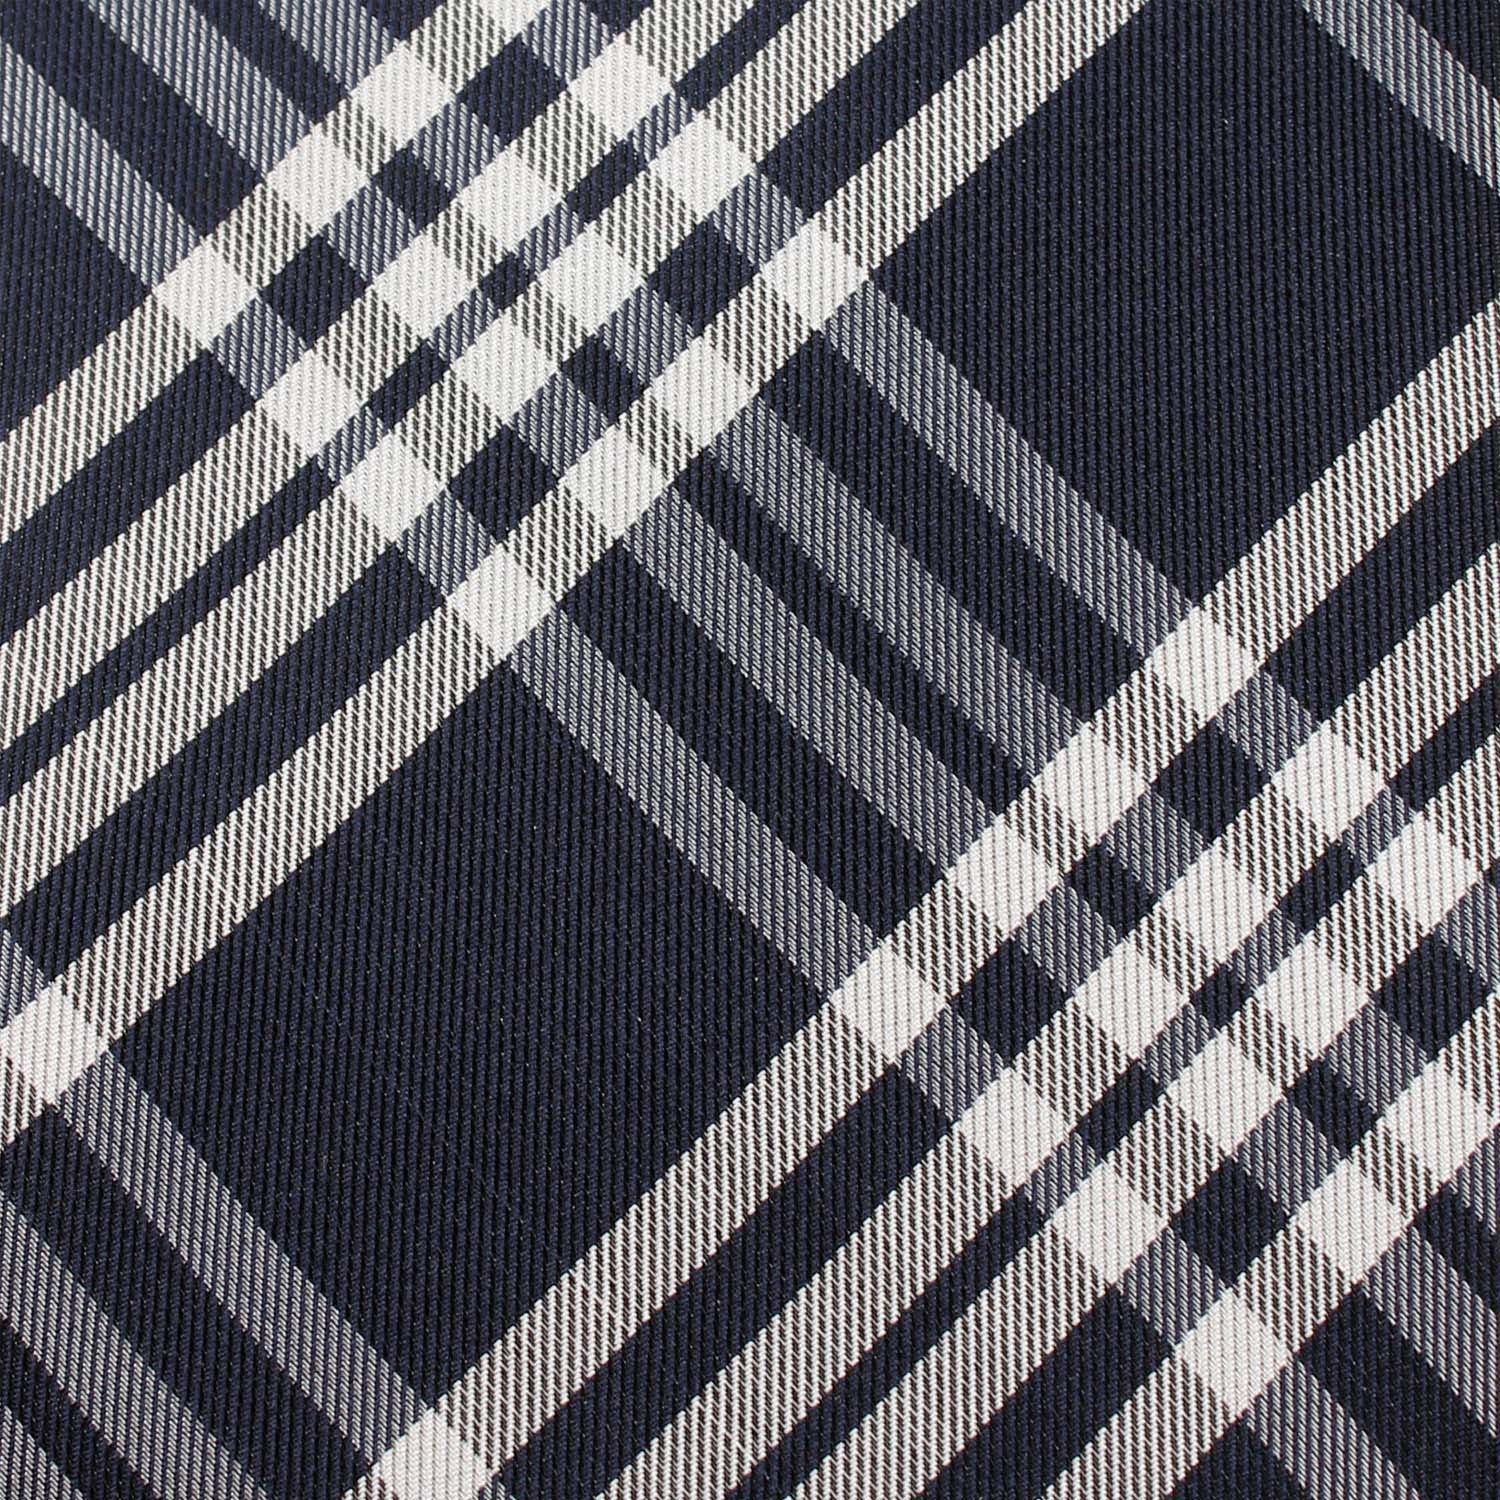 Midnight Blue with White Stripes Fabric Skinny Tie X140